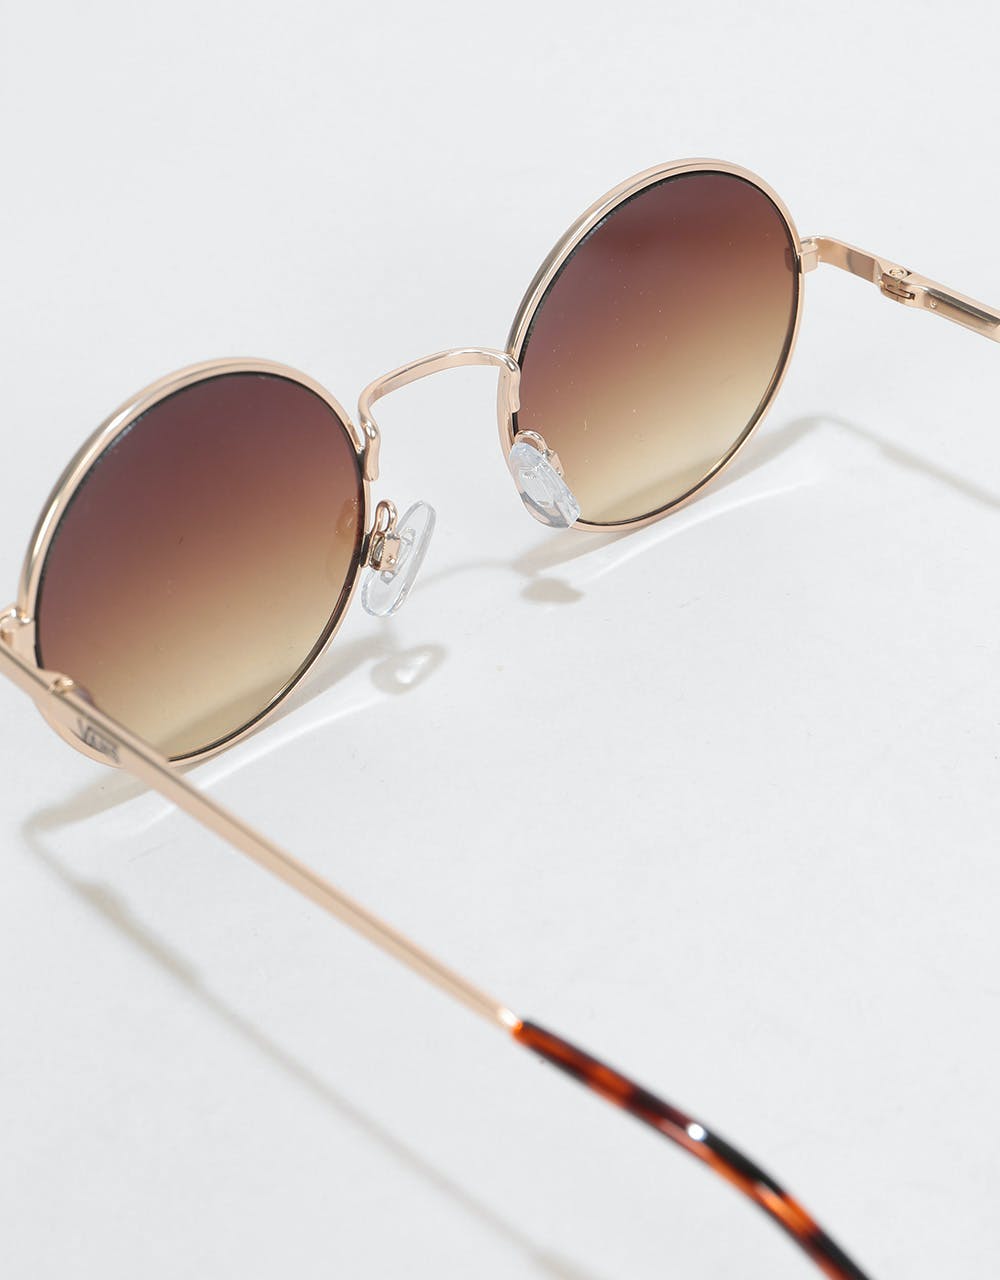 Vans Gundry Sunglasses - Matte Gold-Bronze Brown